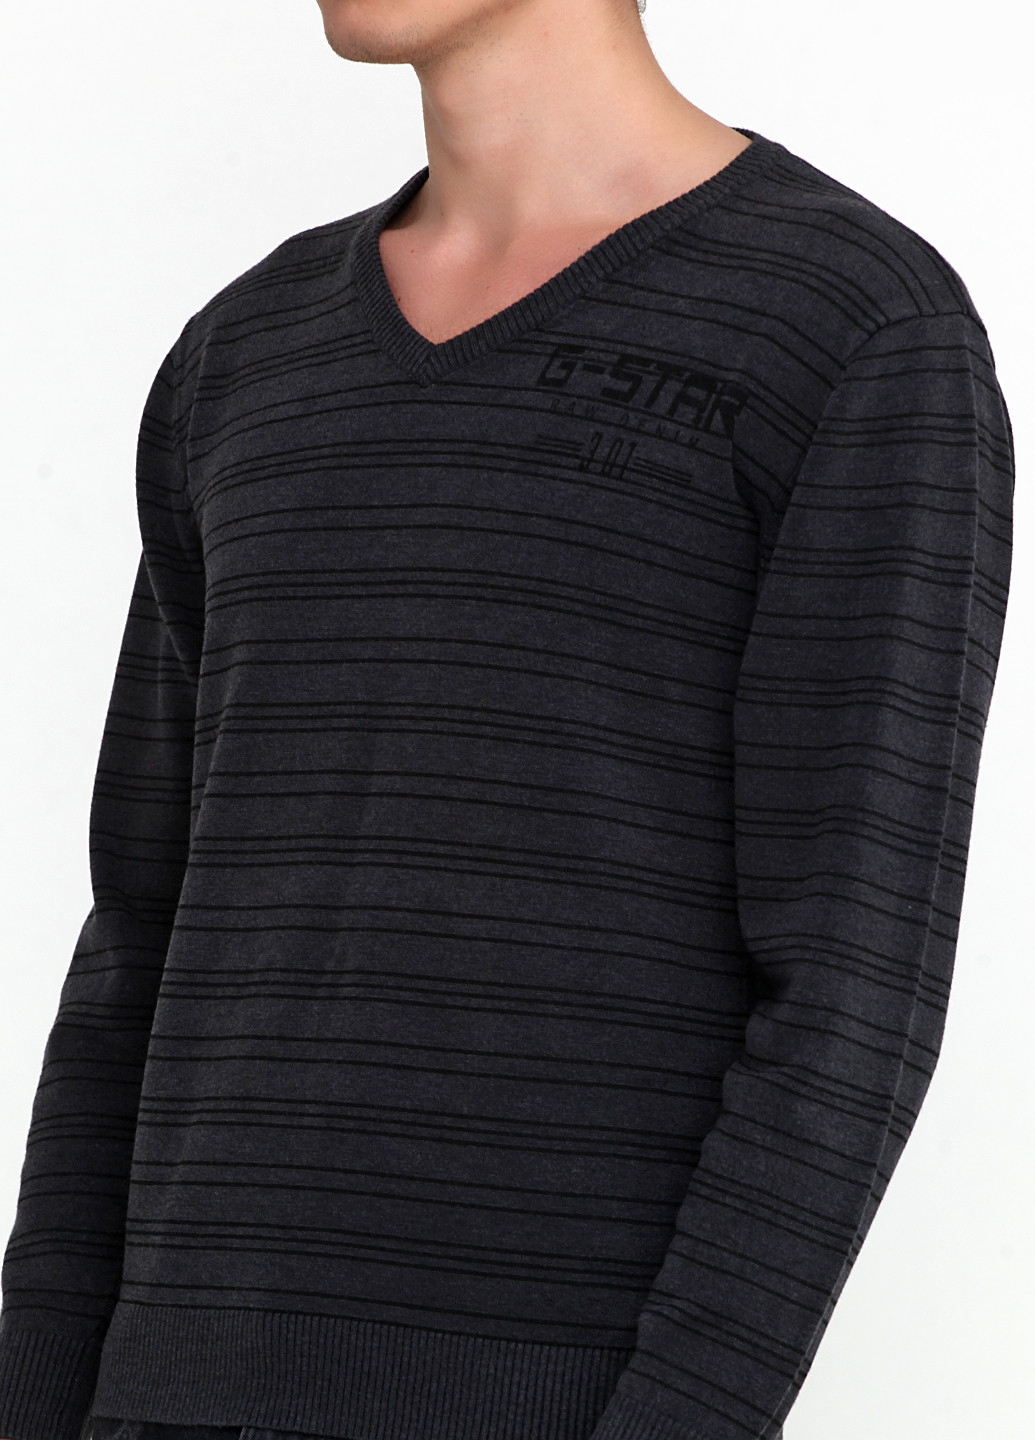 Темно-серый демисезонный пуловер пуловер G-MU21